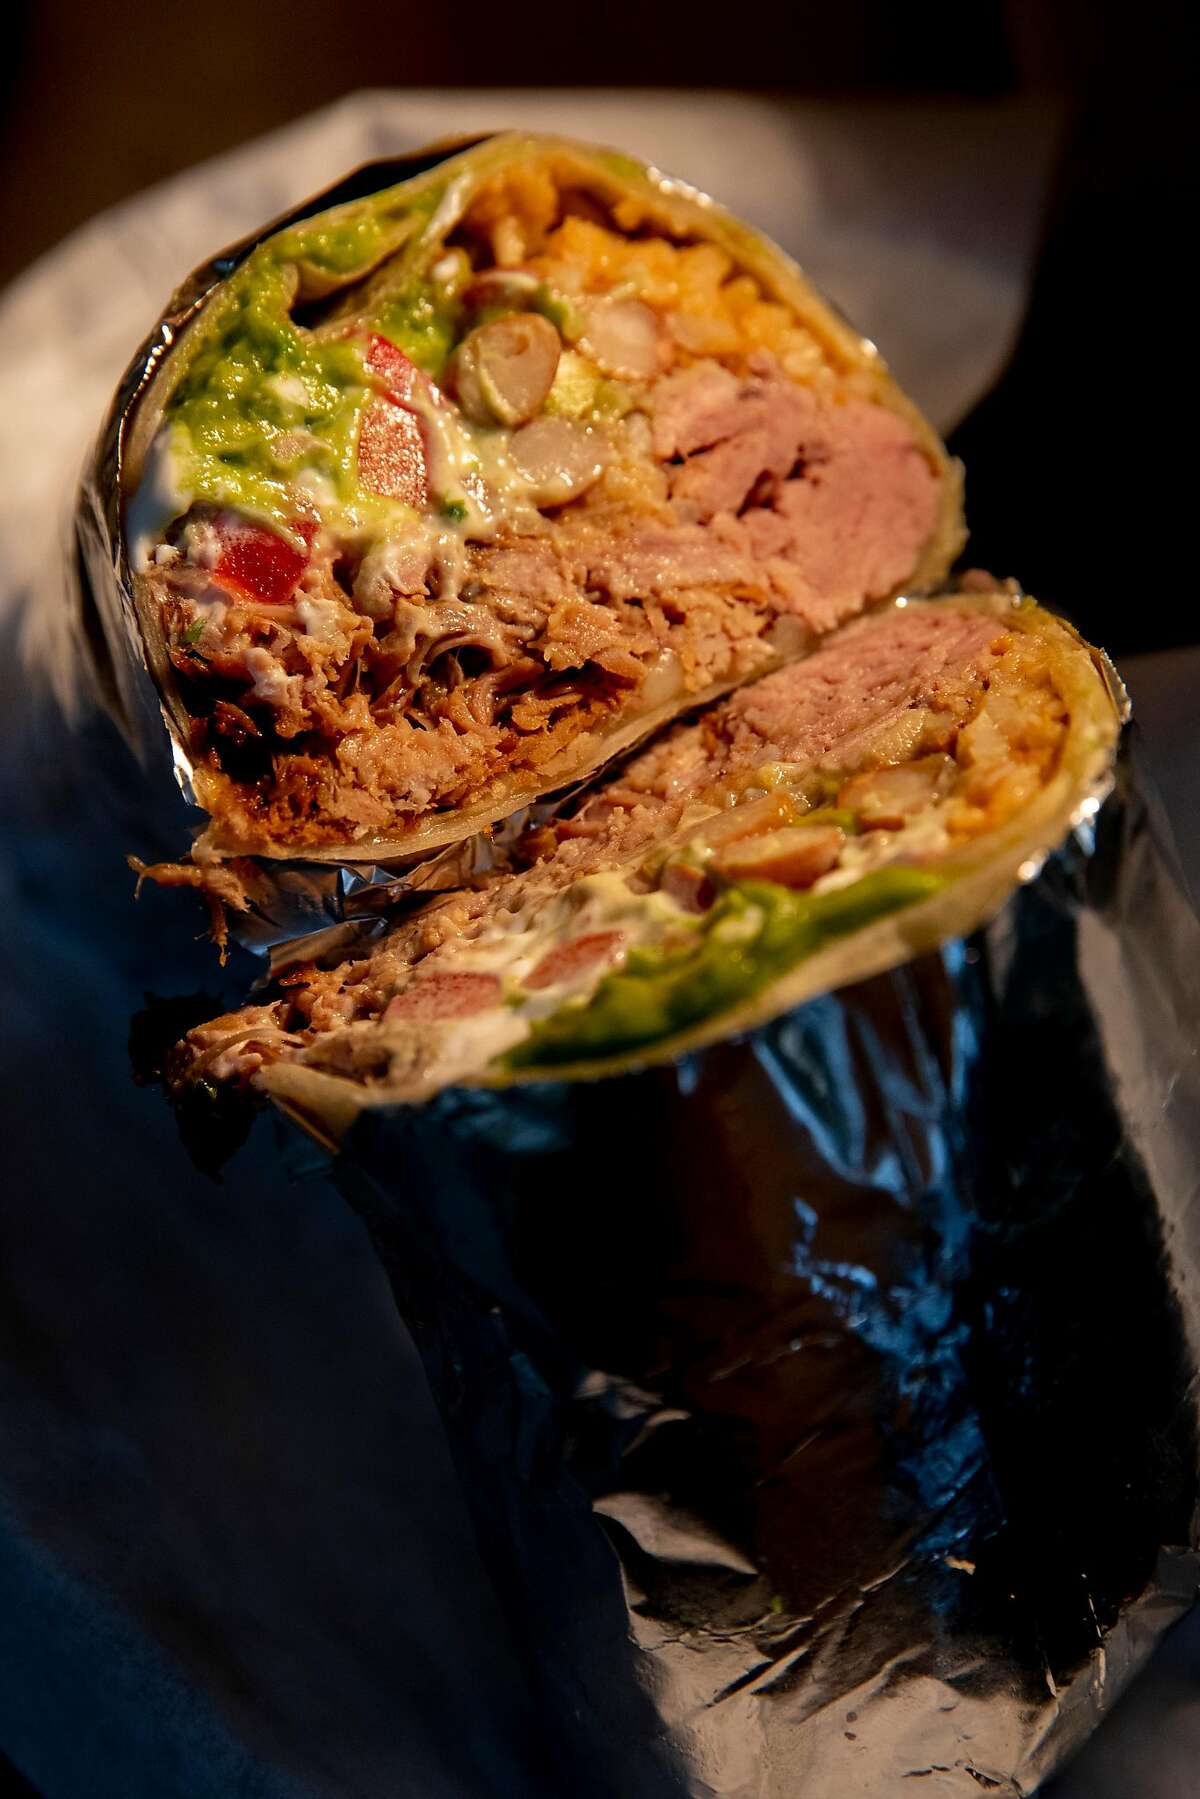 The super carne asada burrito photographed at Ramiro & Sons Taqueria in Alameda, Calif. Tuesday, August 4, 2020.